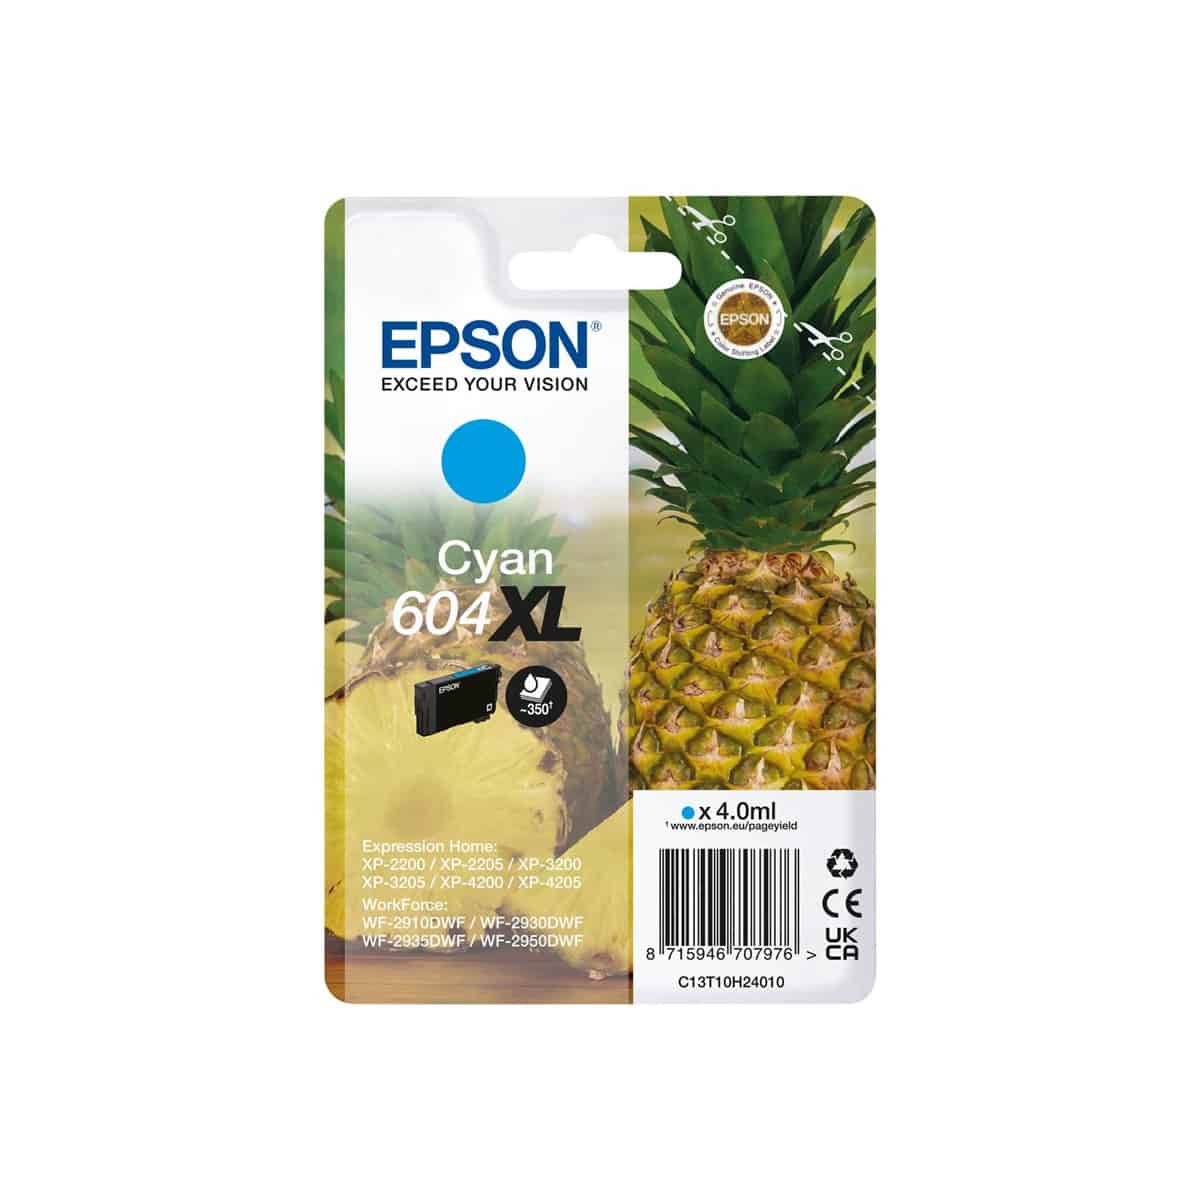 604 XL C Cartouche Epson C13T10H24010 - Cyan - Ananas